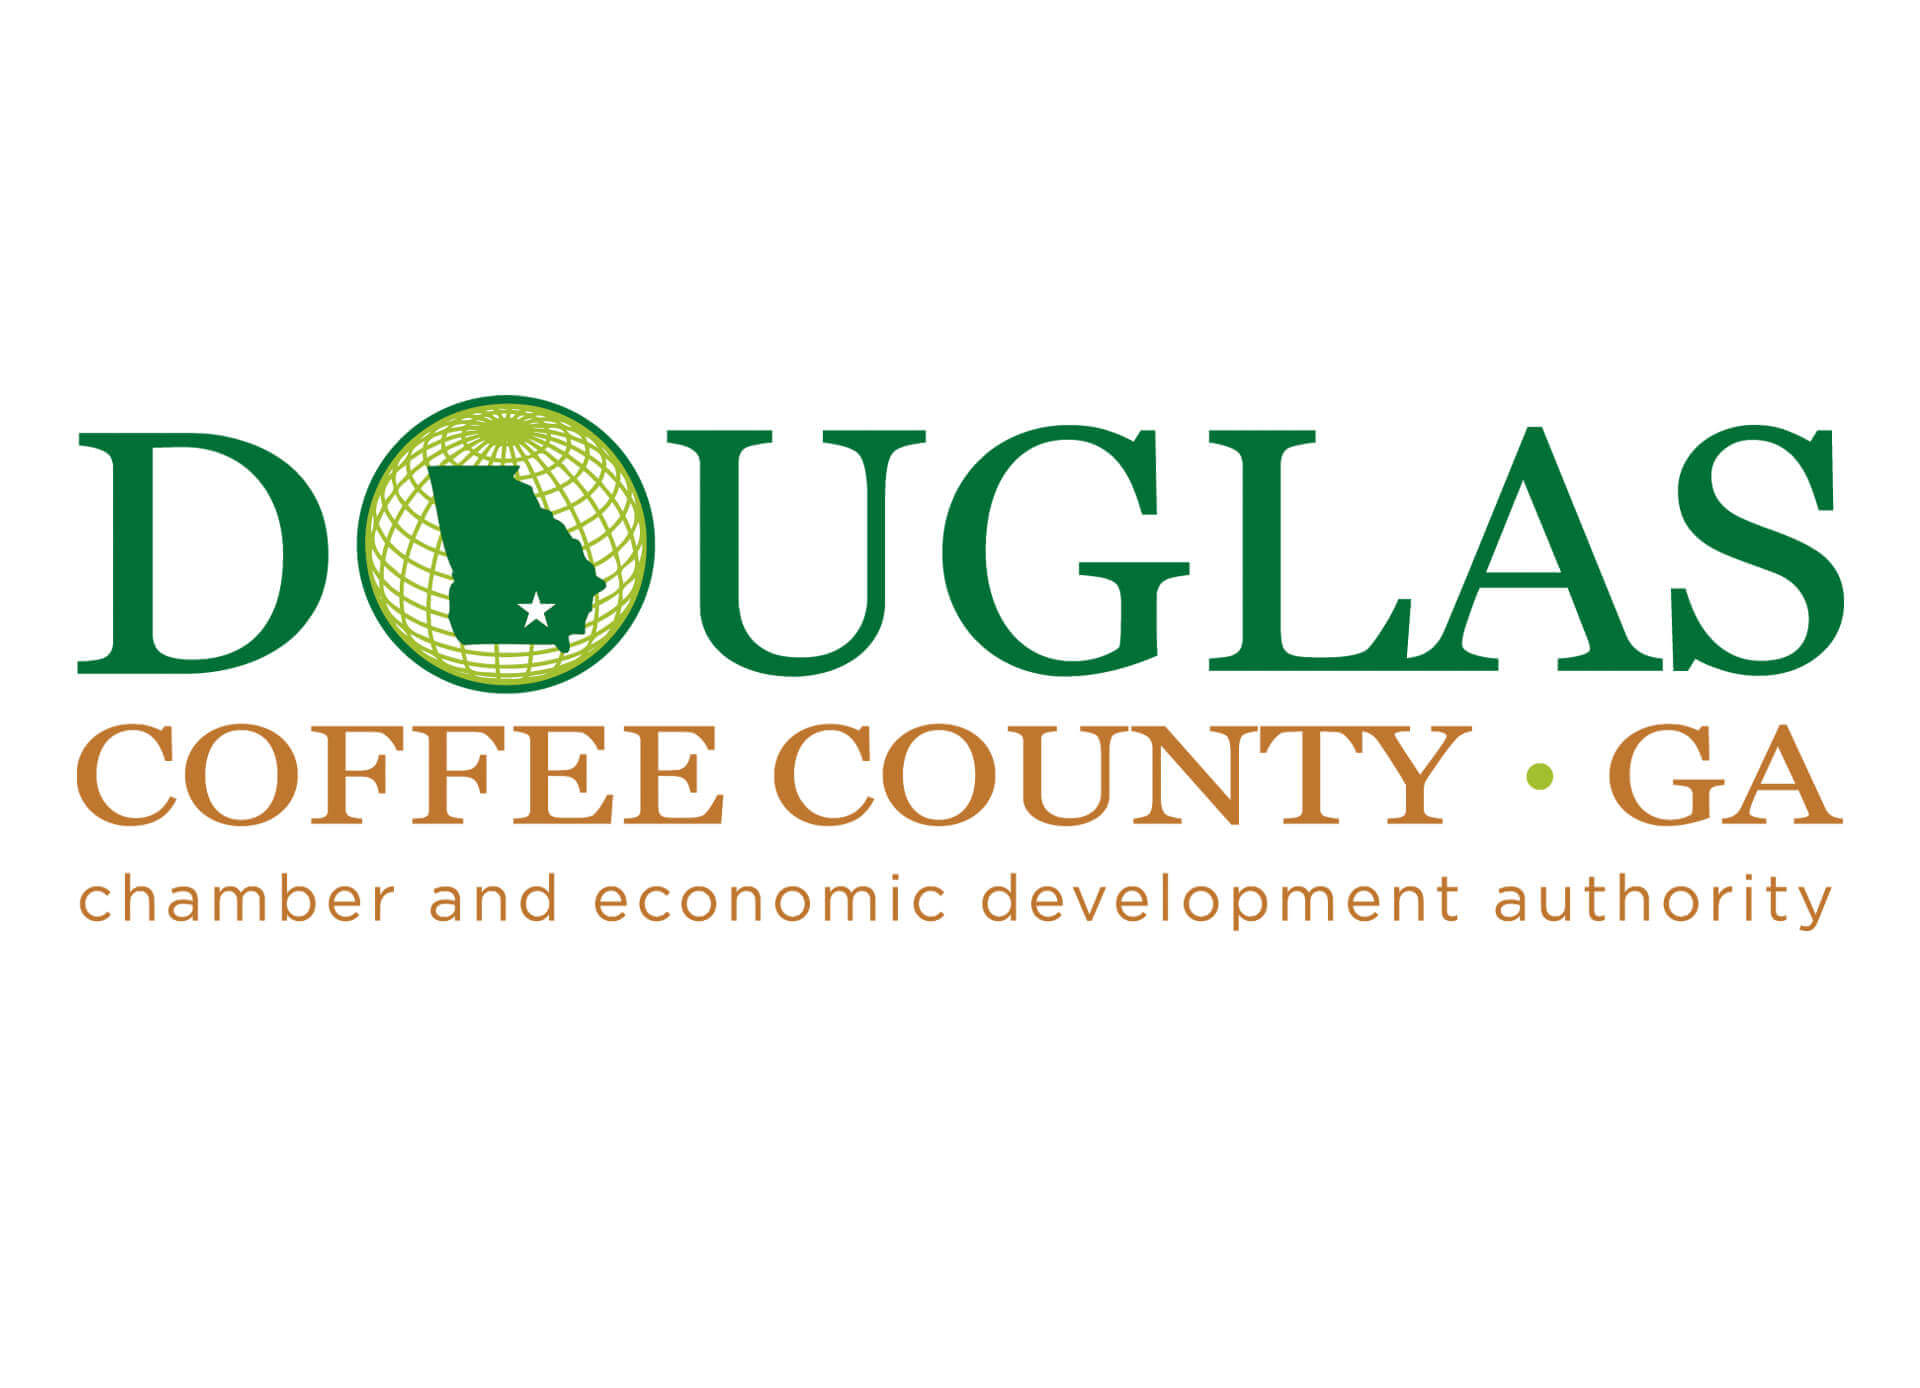 Douglas-Coffee County